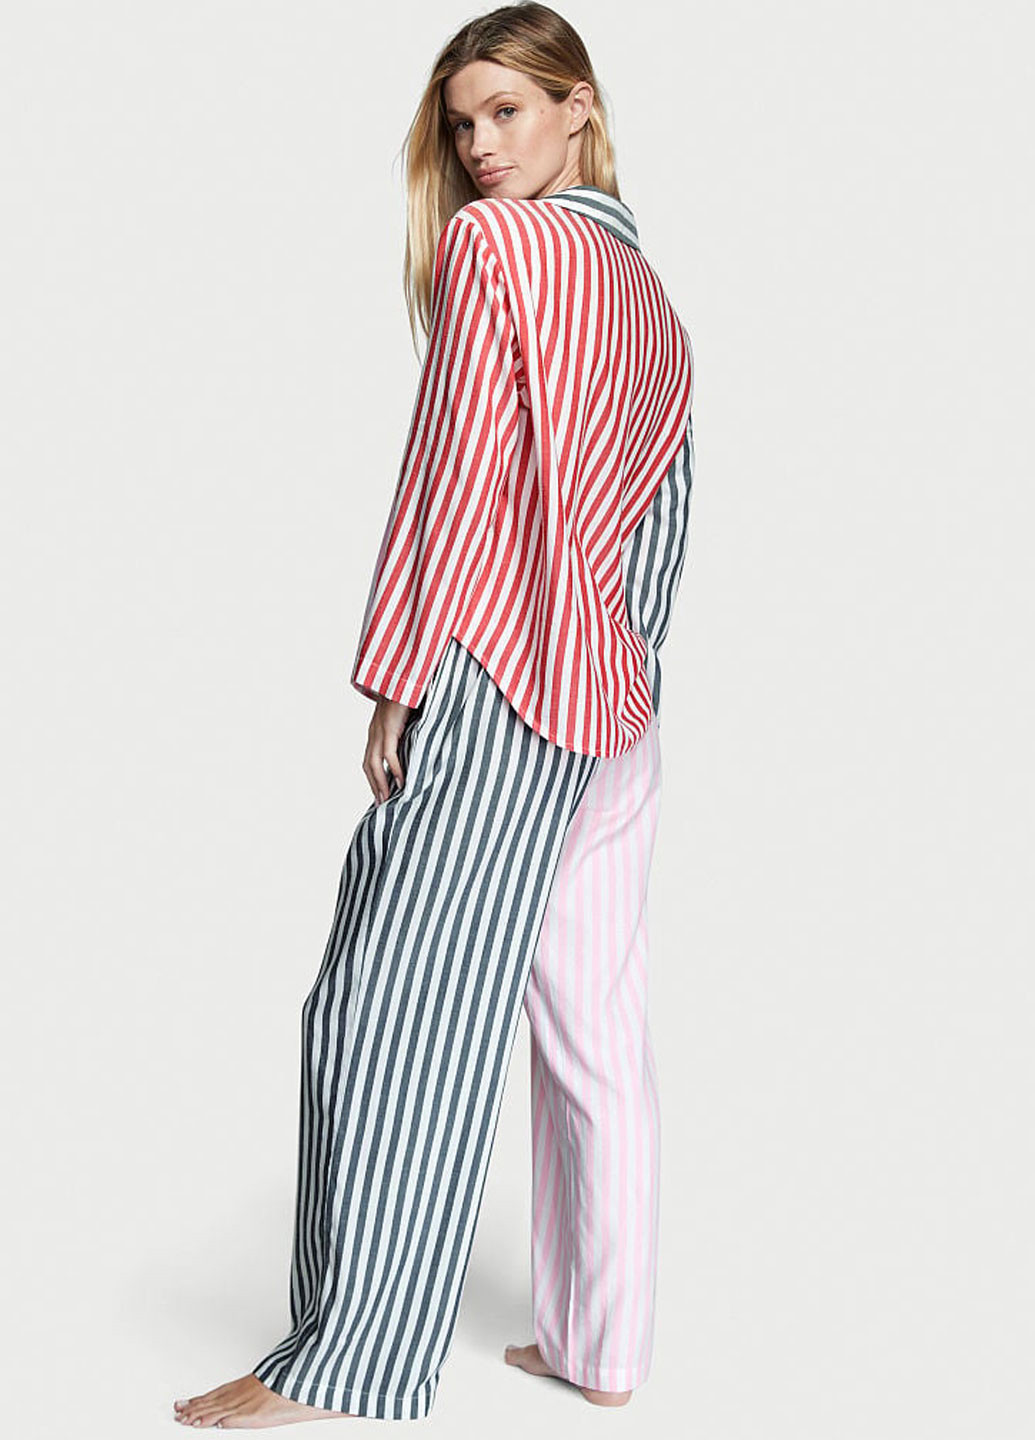 Комбинированная всесезон пижама (рубашка, брюки) рубашка + брюки Victoria's Secret